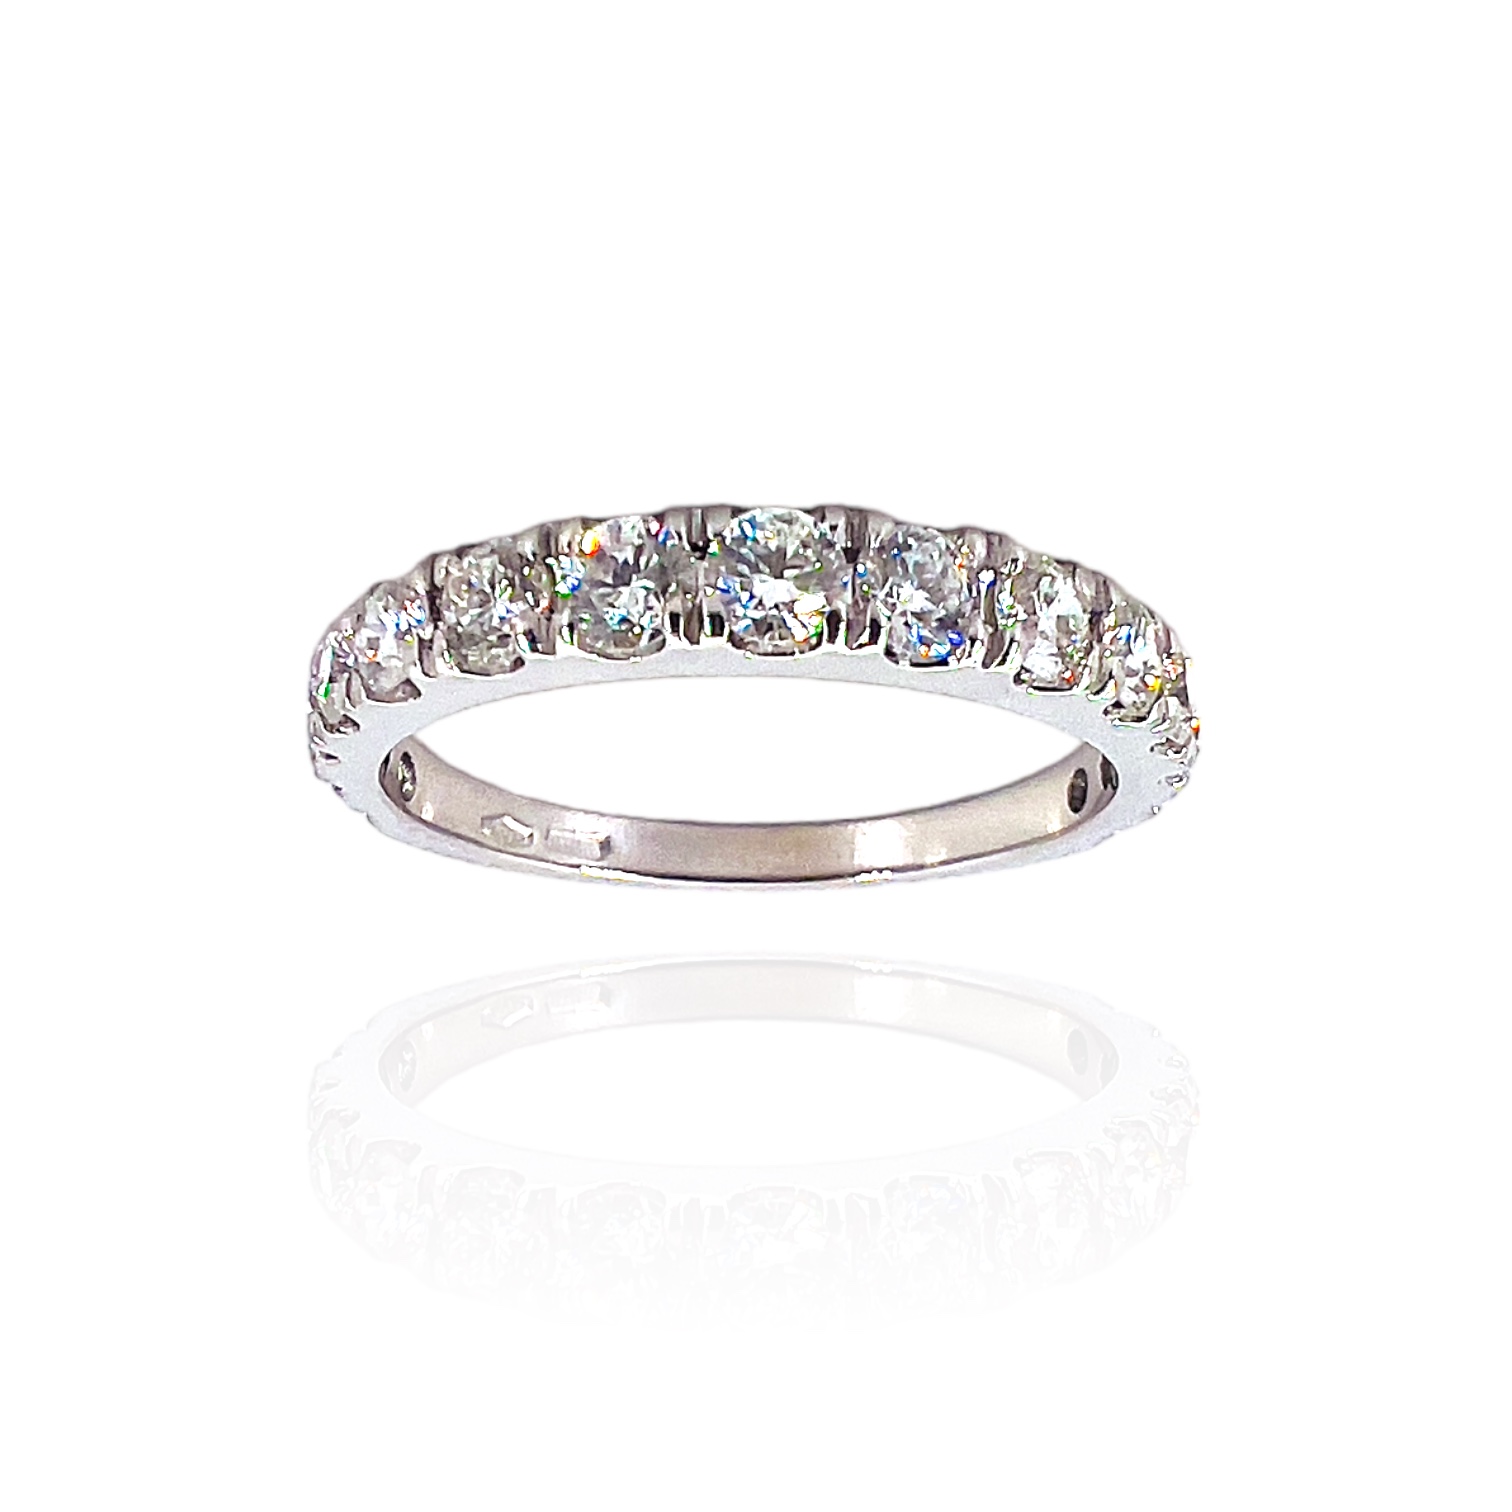 Veretta ring with diamonds Art.4379/39